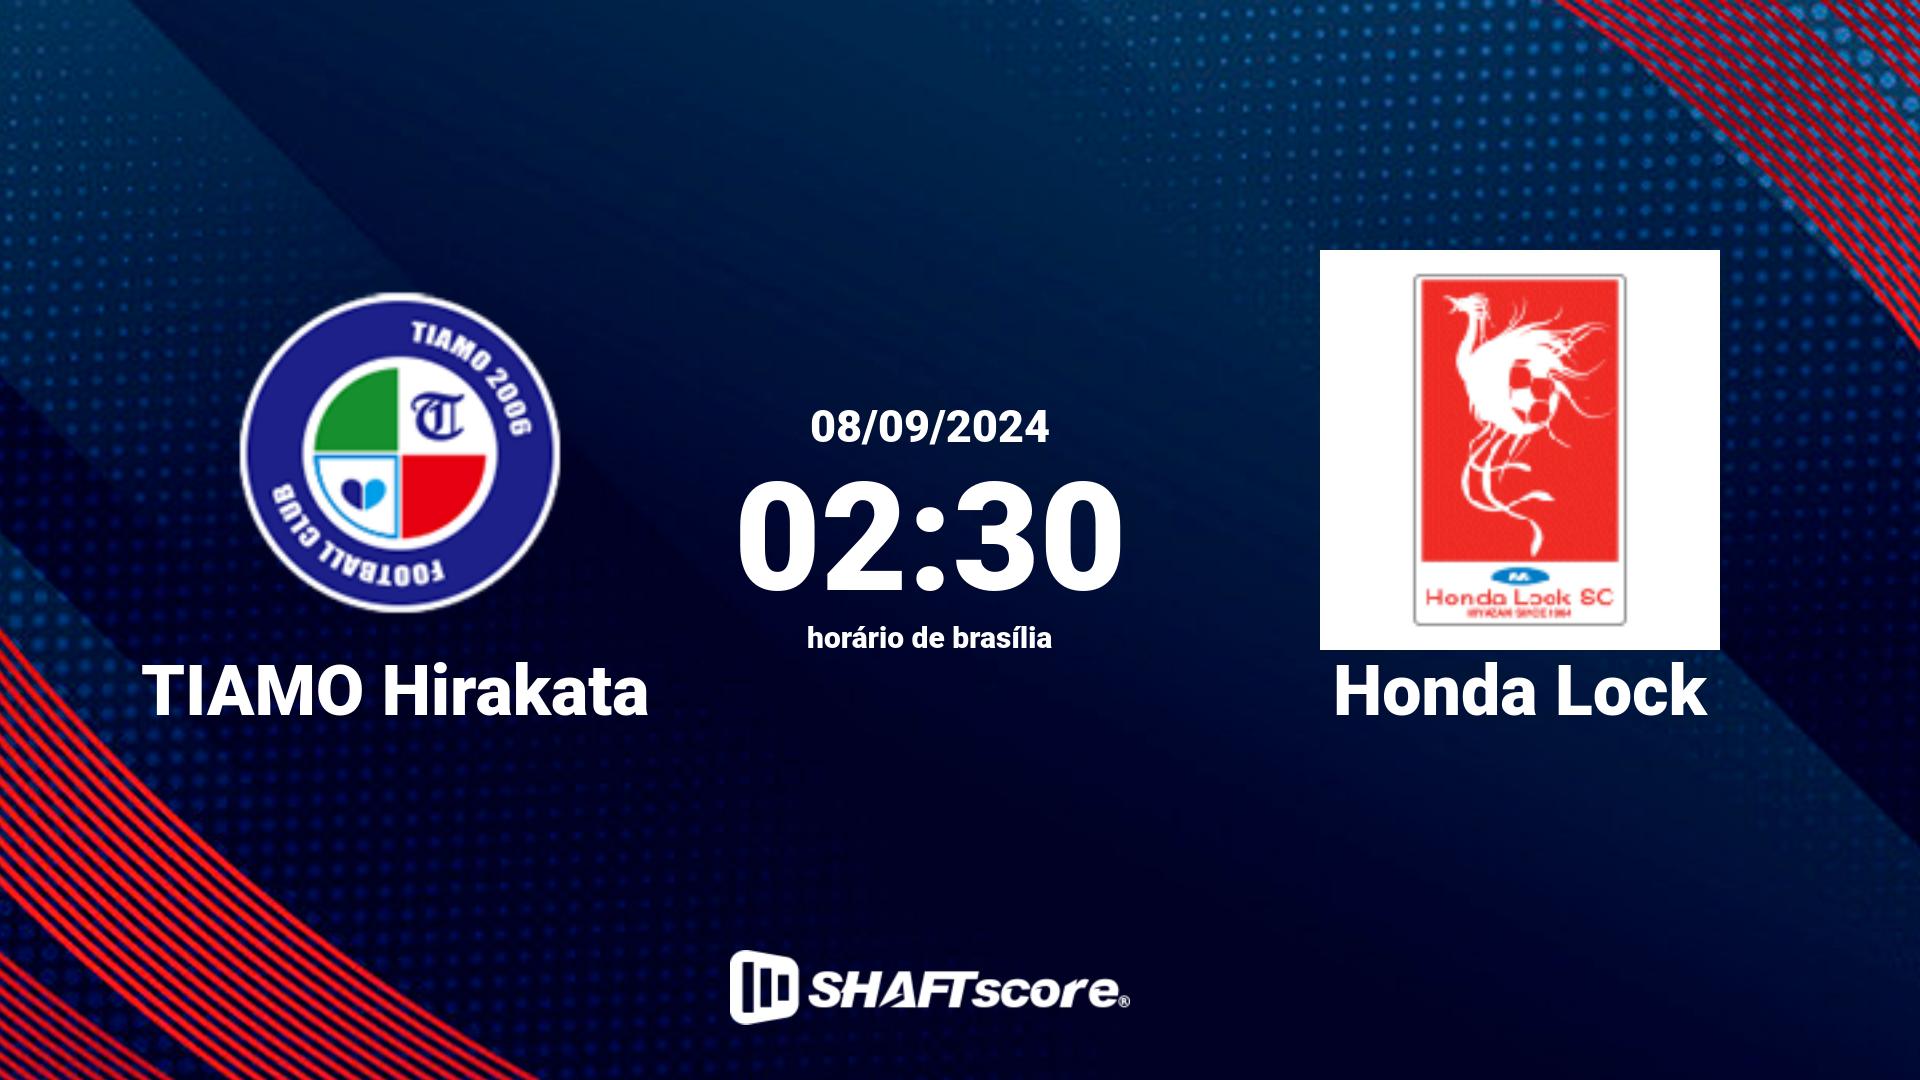 Estatísticas do jogo TIAMO Hirakata vs Honda Lock 08.09 02:30